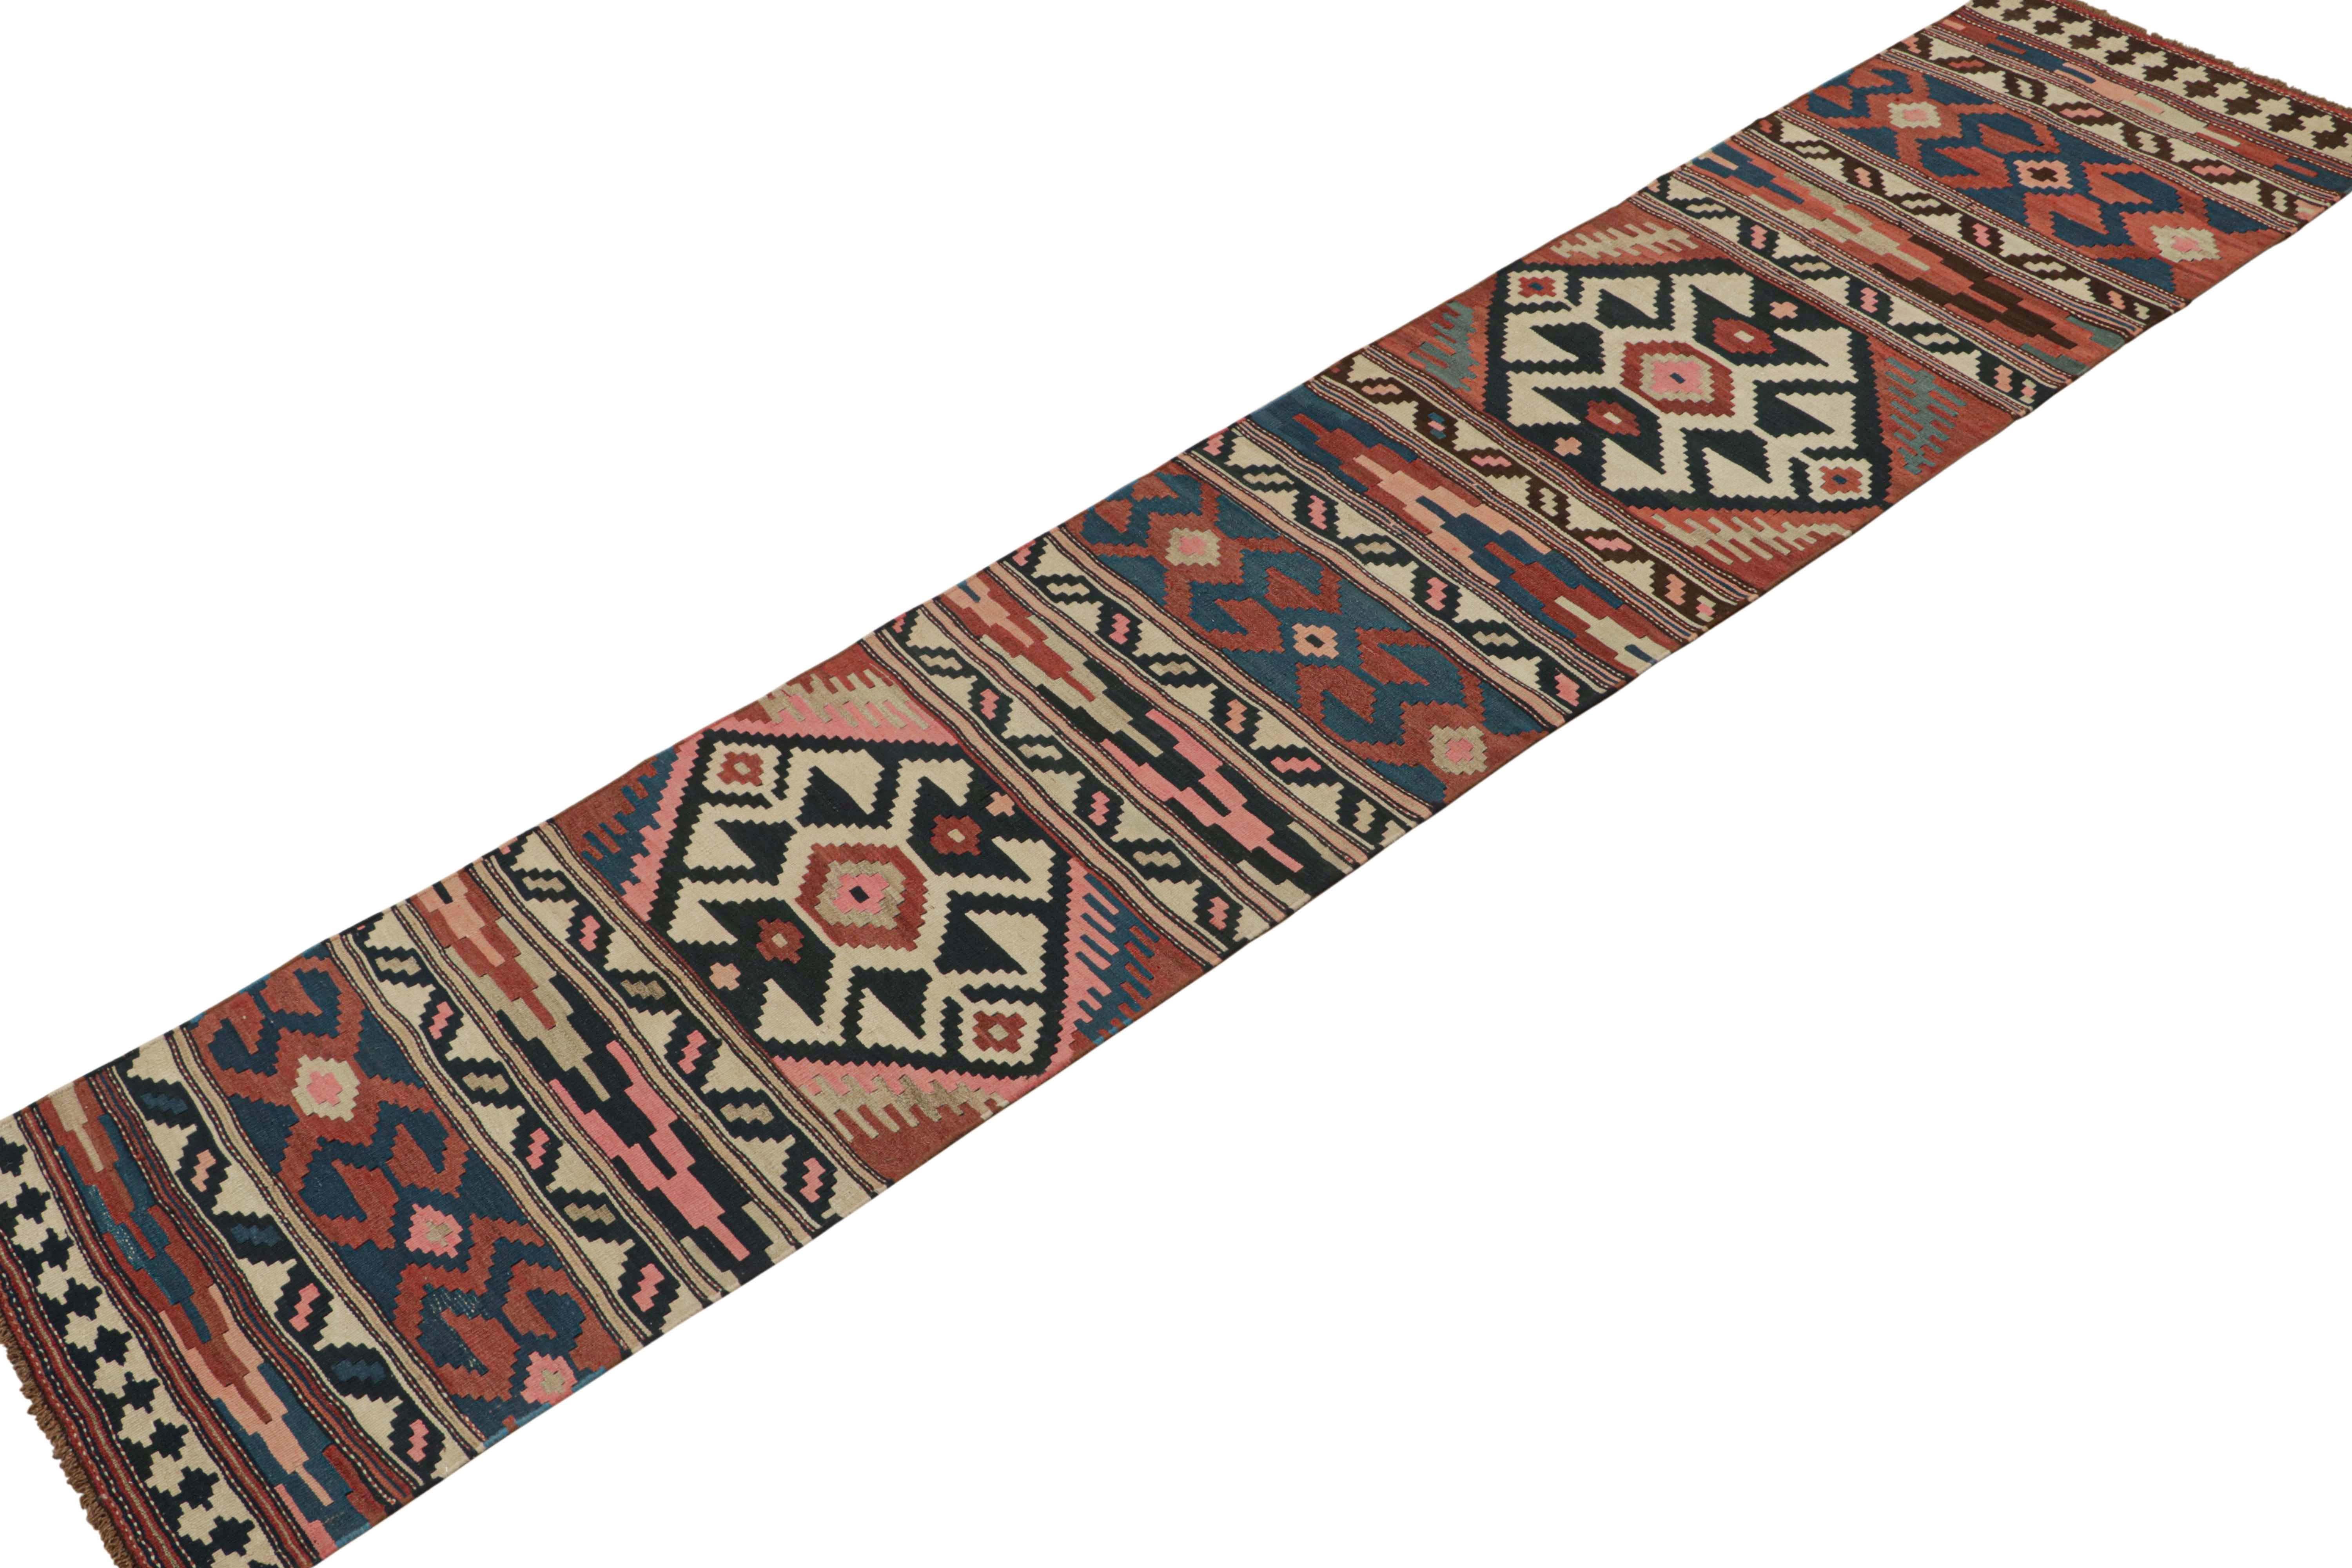 Tribal Vintage Persian Kilim Runner in Polychromatic Geometric Patterns